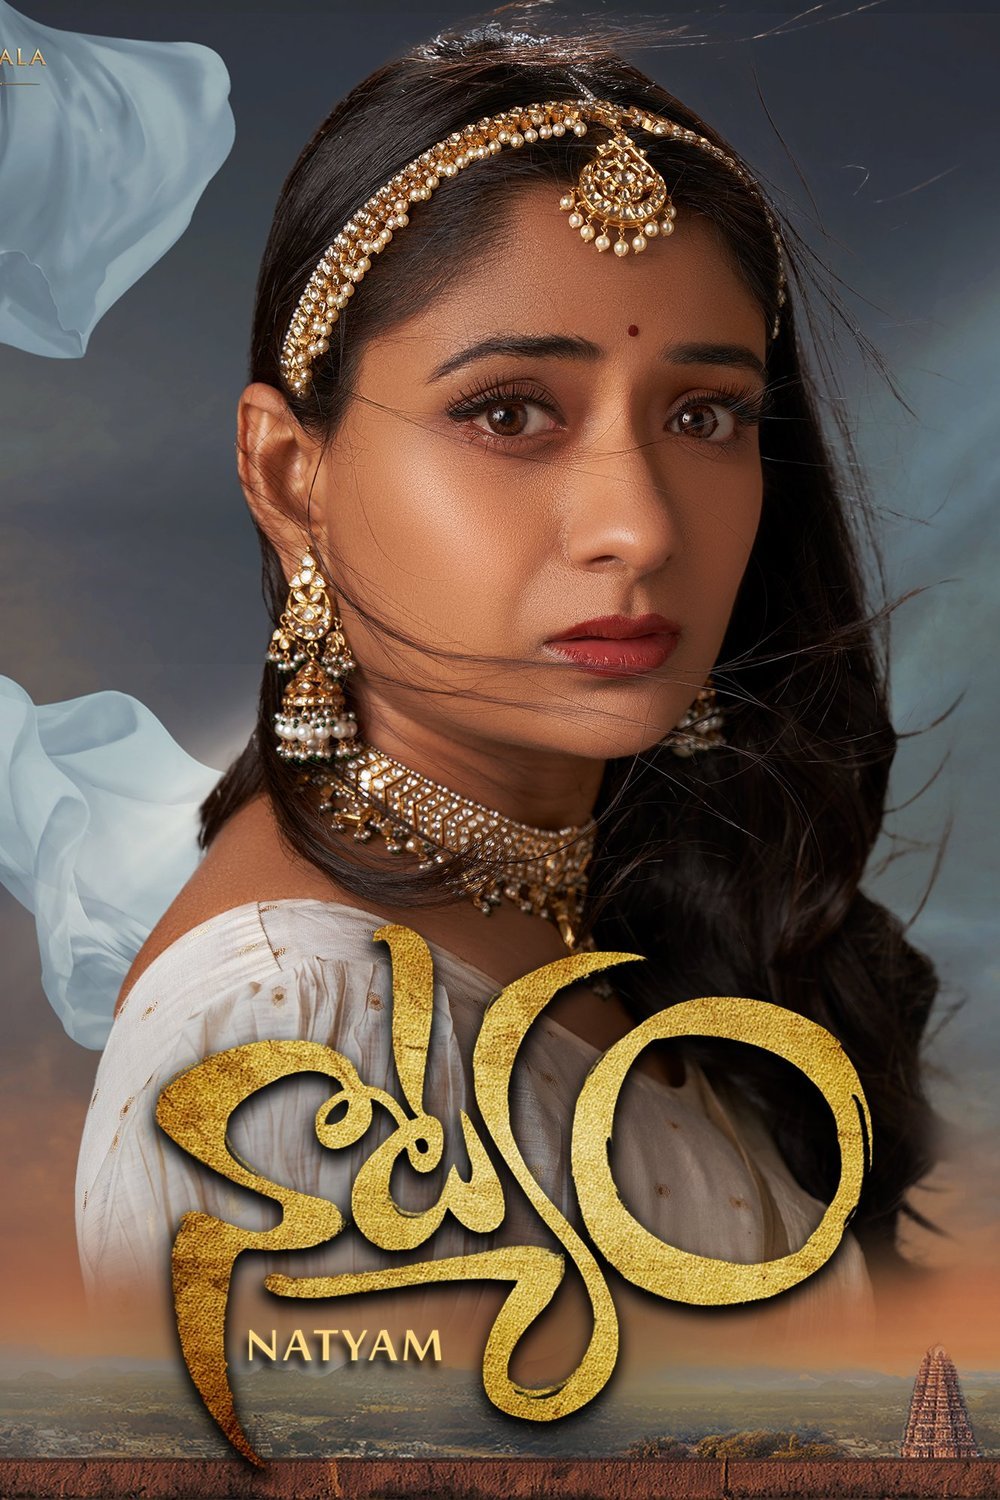 Telugu poster of the movie Natyam